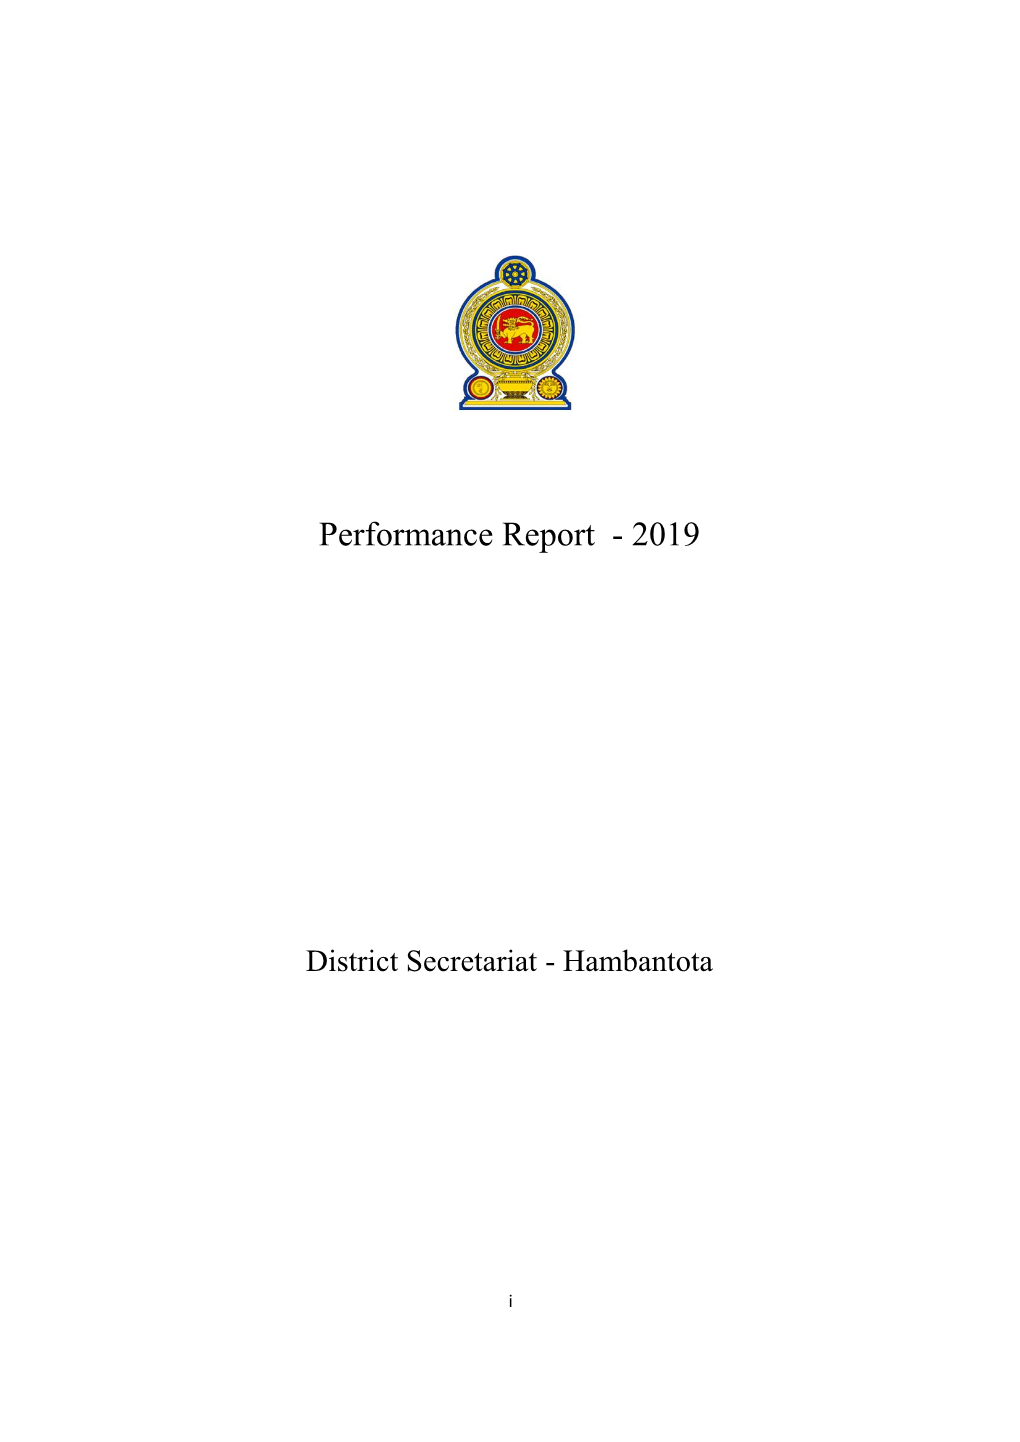 Performance Report of the District Secretariat